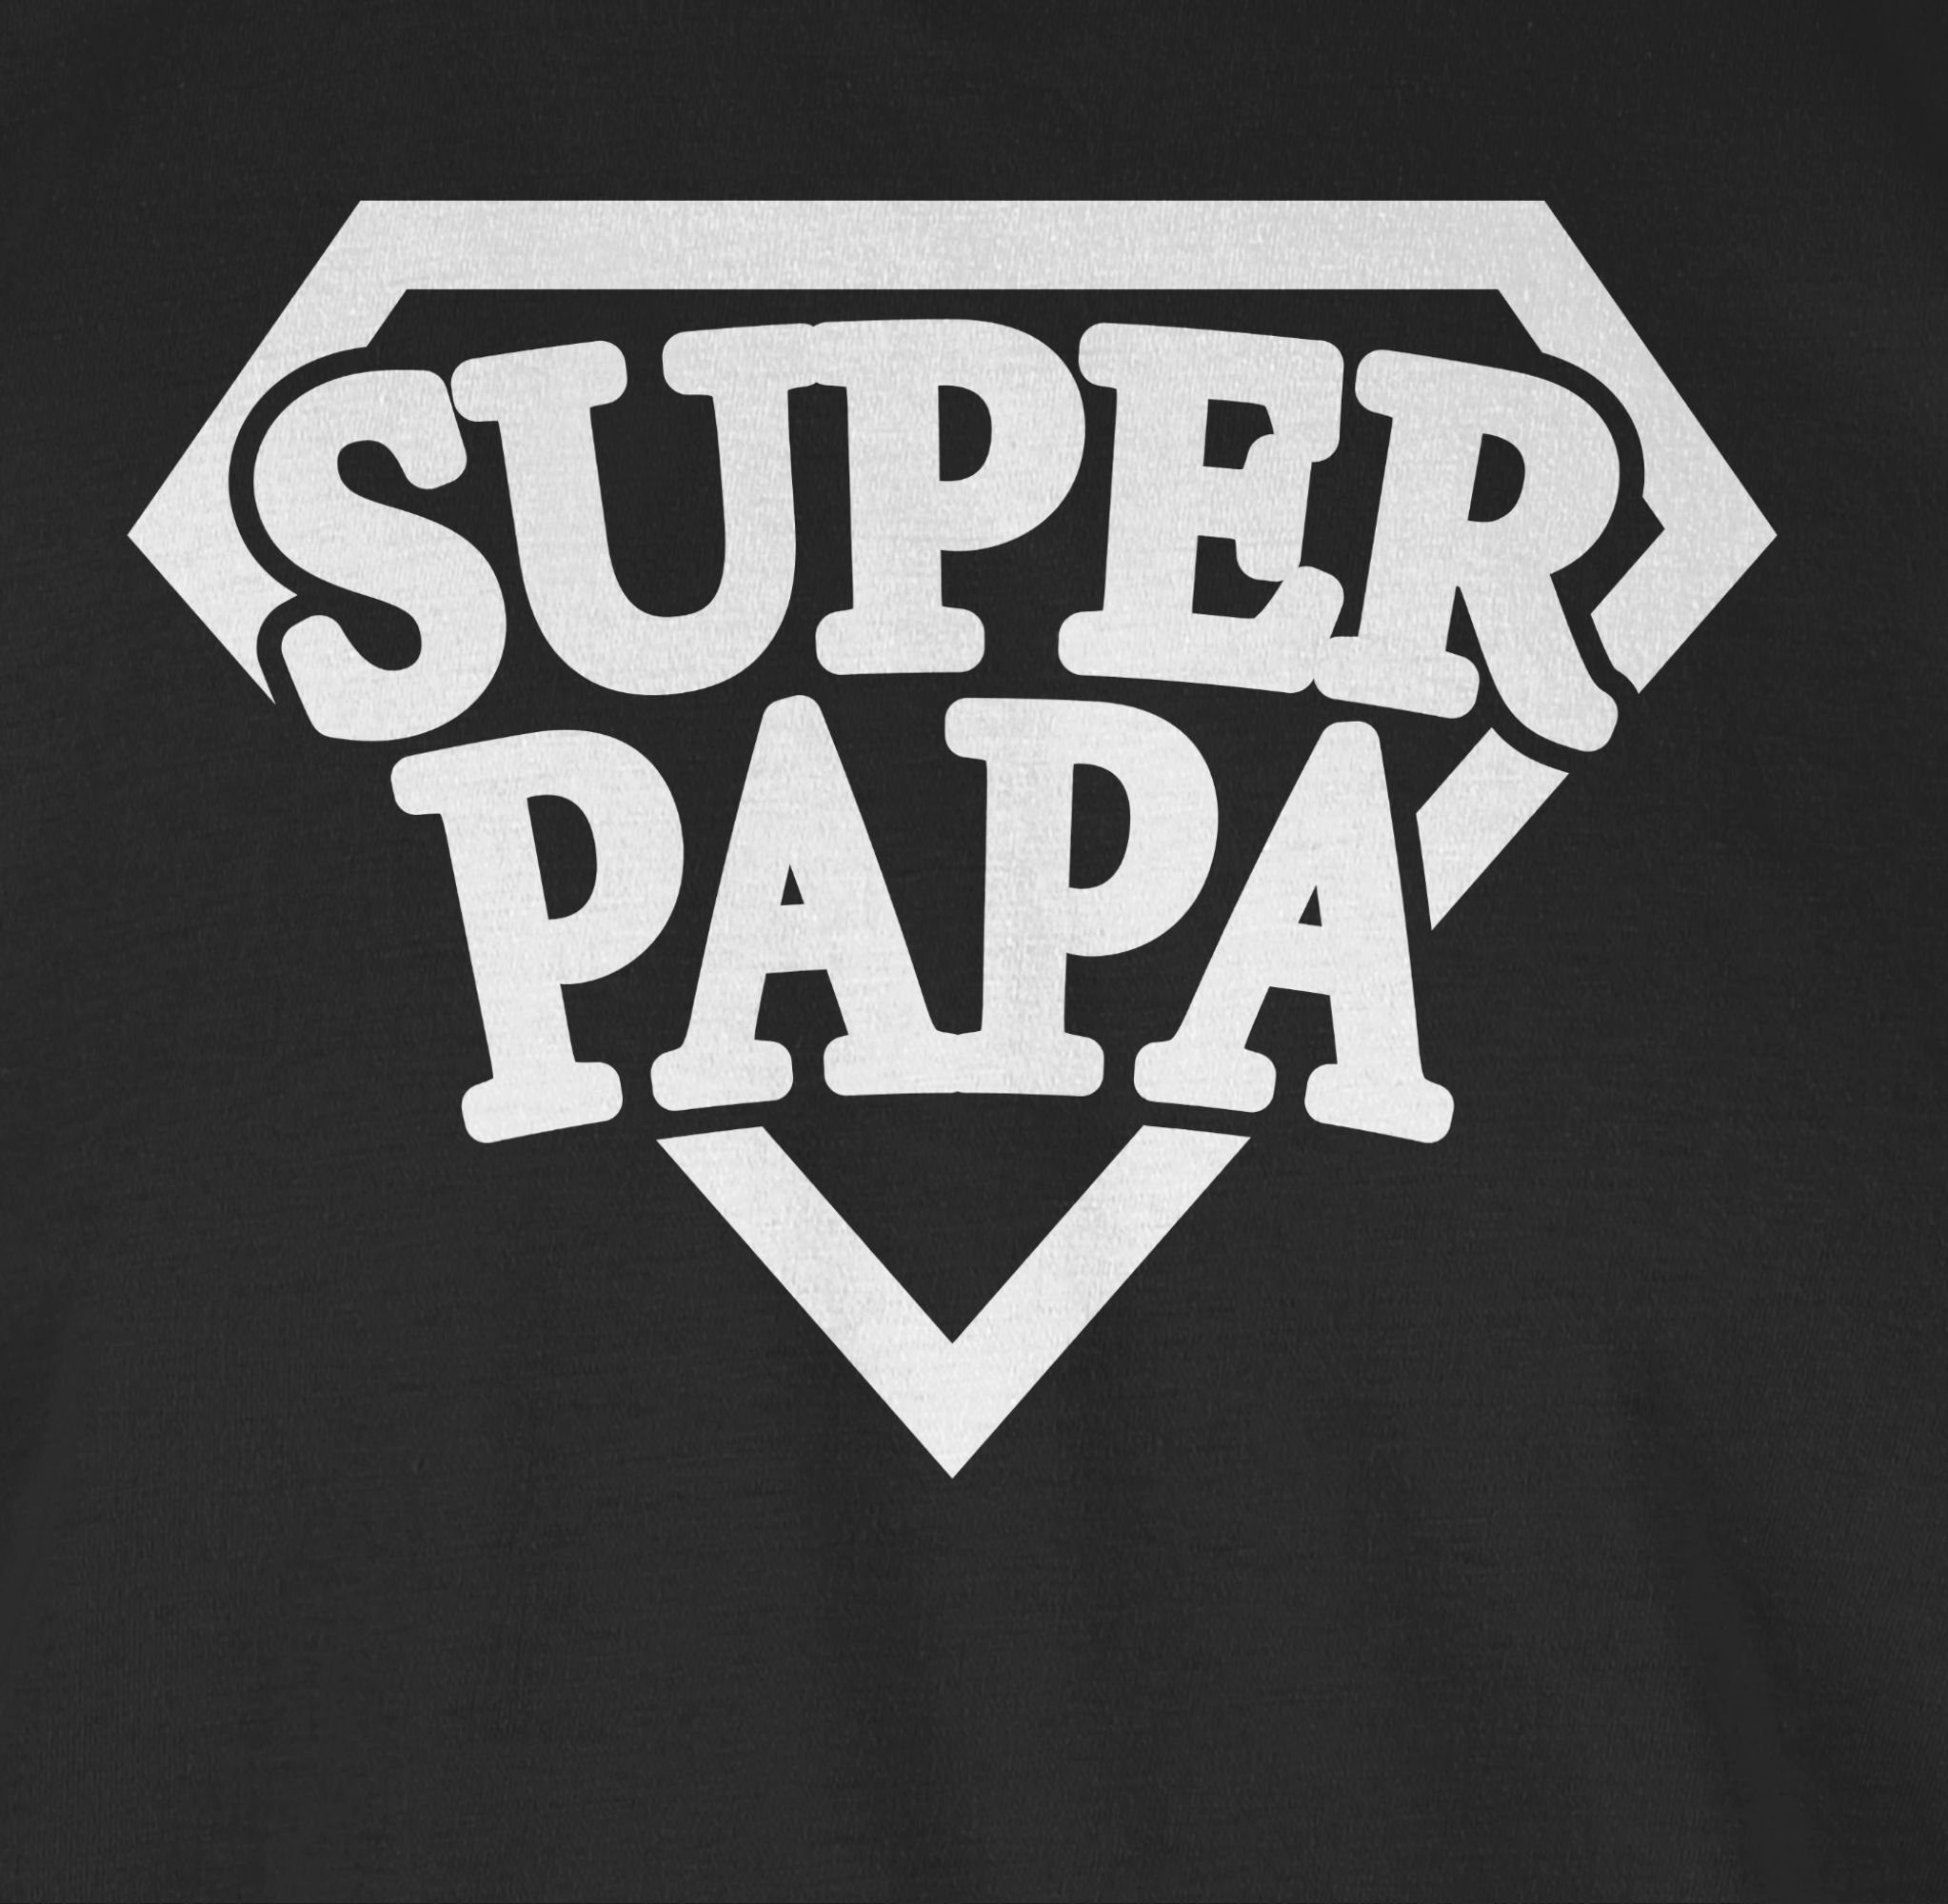 Herren Shirts Shirtracer T-Shirt Super Papa - Superheld - Vatertag Geschenk - Herren Premium T-Shirt Vater Geschenk Männertag Ge